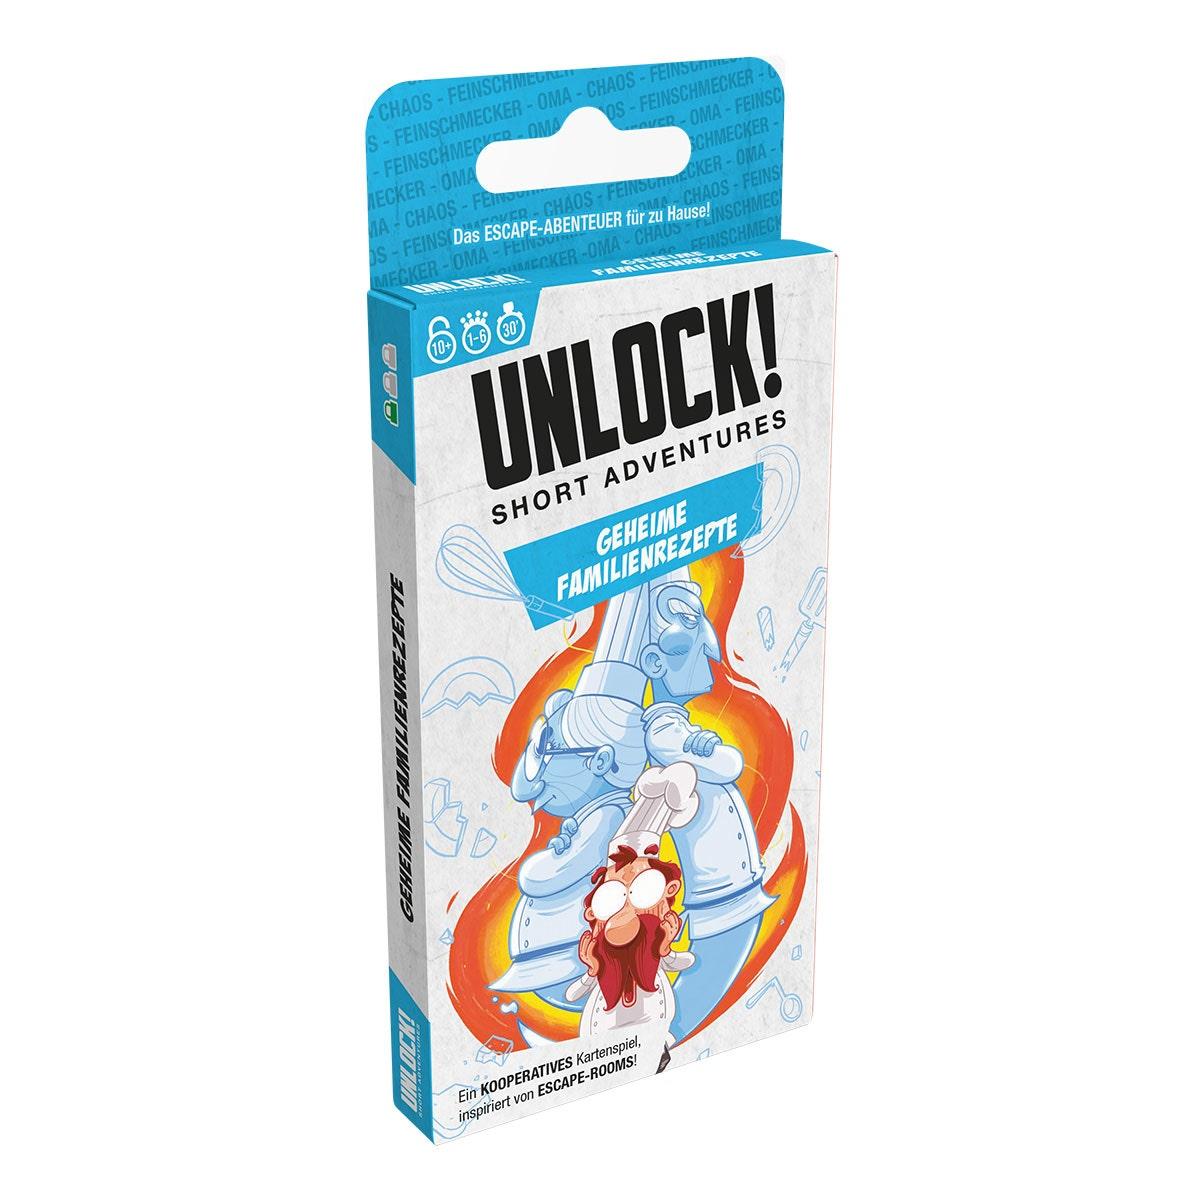 Unlock! Short Adventures - Geheime Familienrezepte